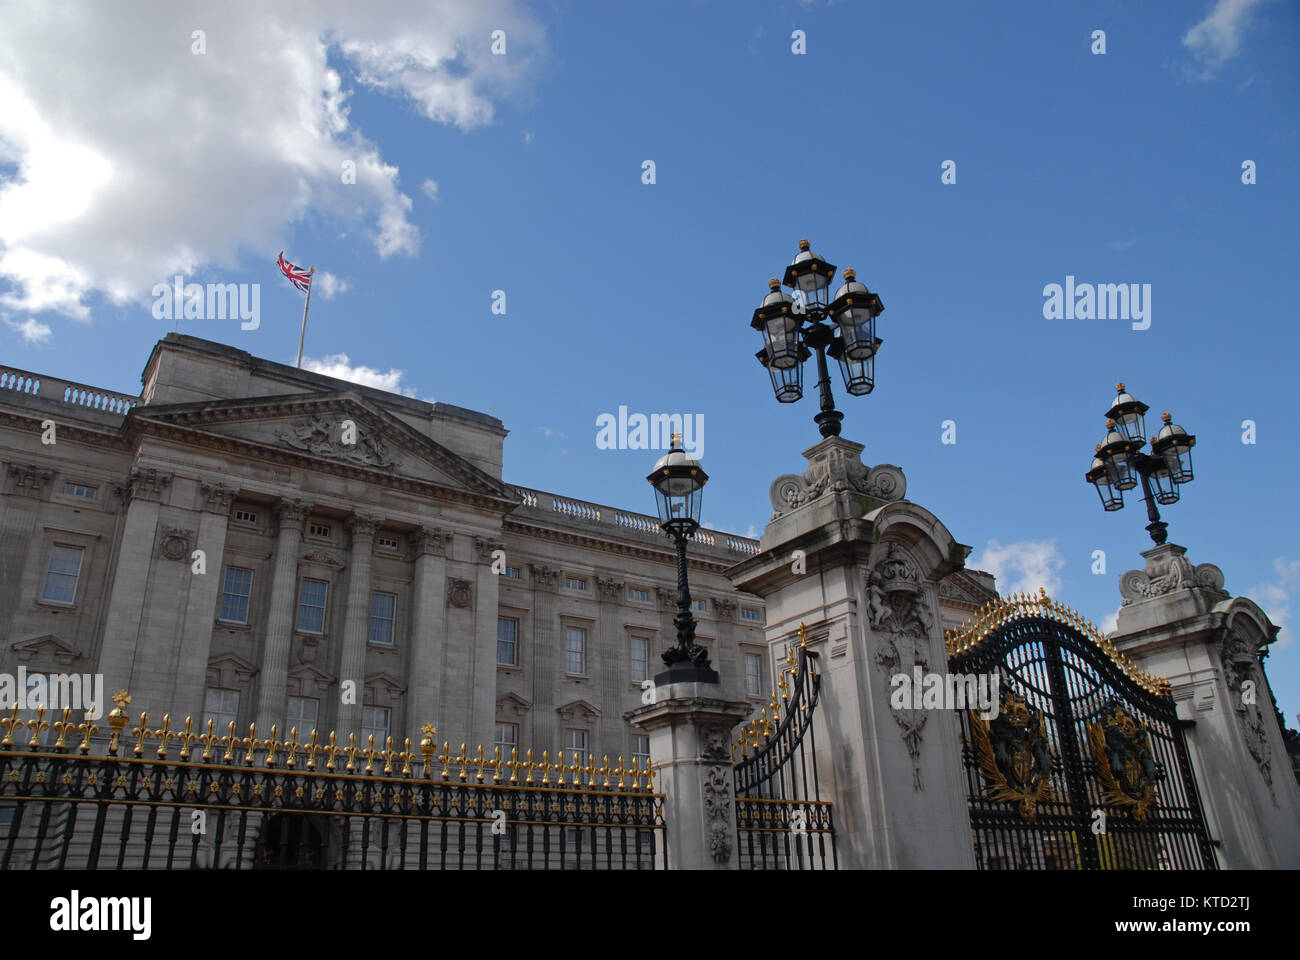 London, United Kingdom - April 11, 2015: Main gate and balcony at Buckingham Palace Stock Photo